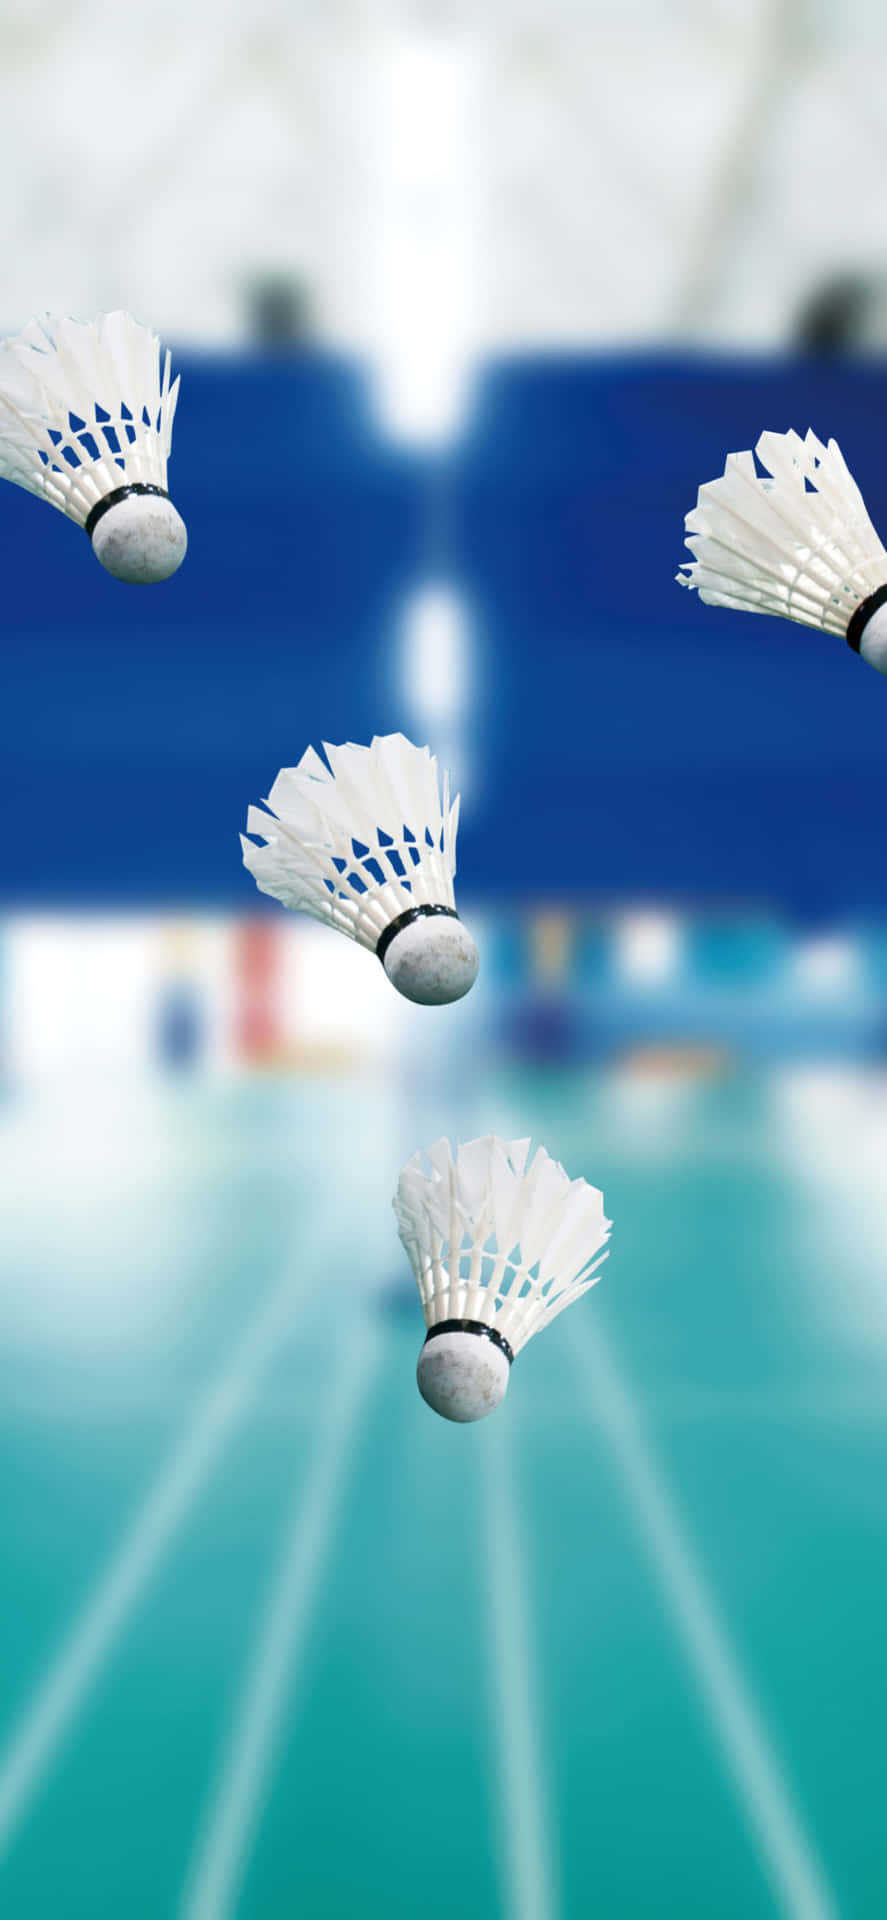 Aproveitejogar Badminton Com O Novo Iphone Xs Max.